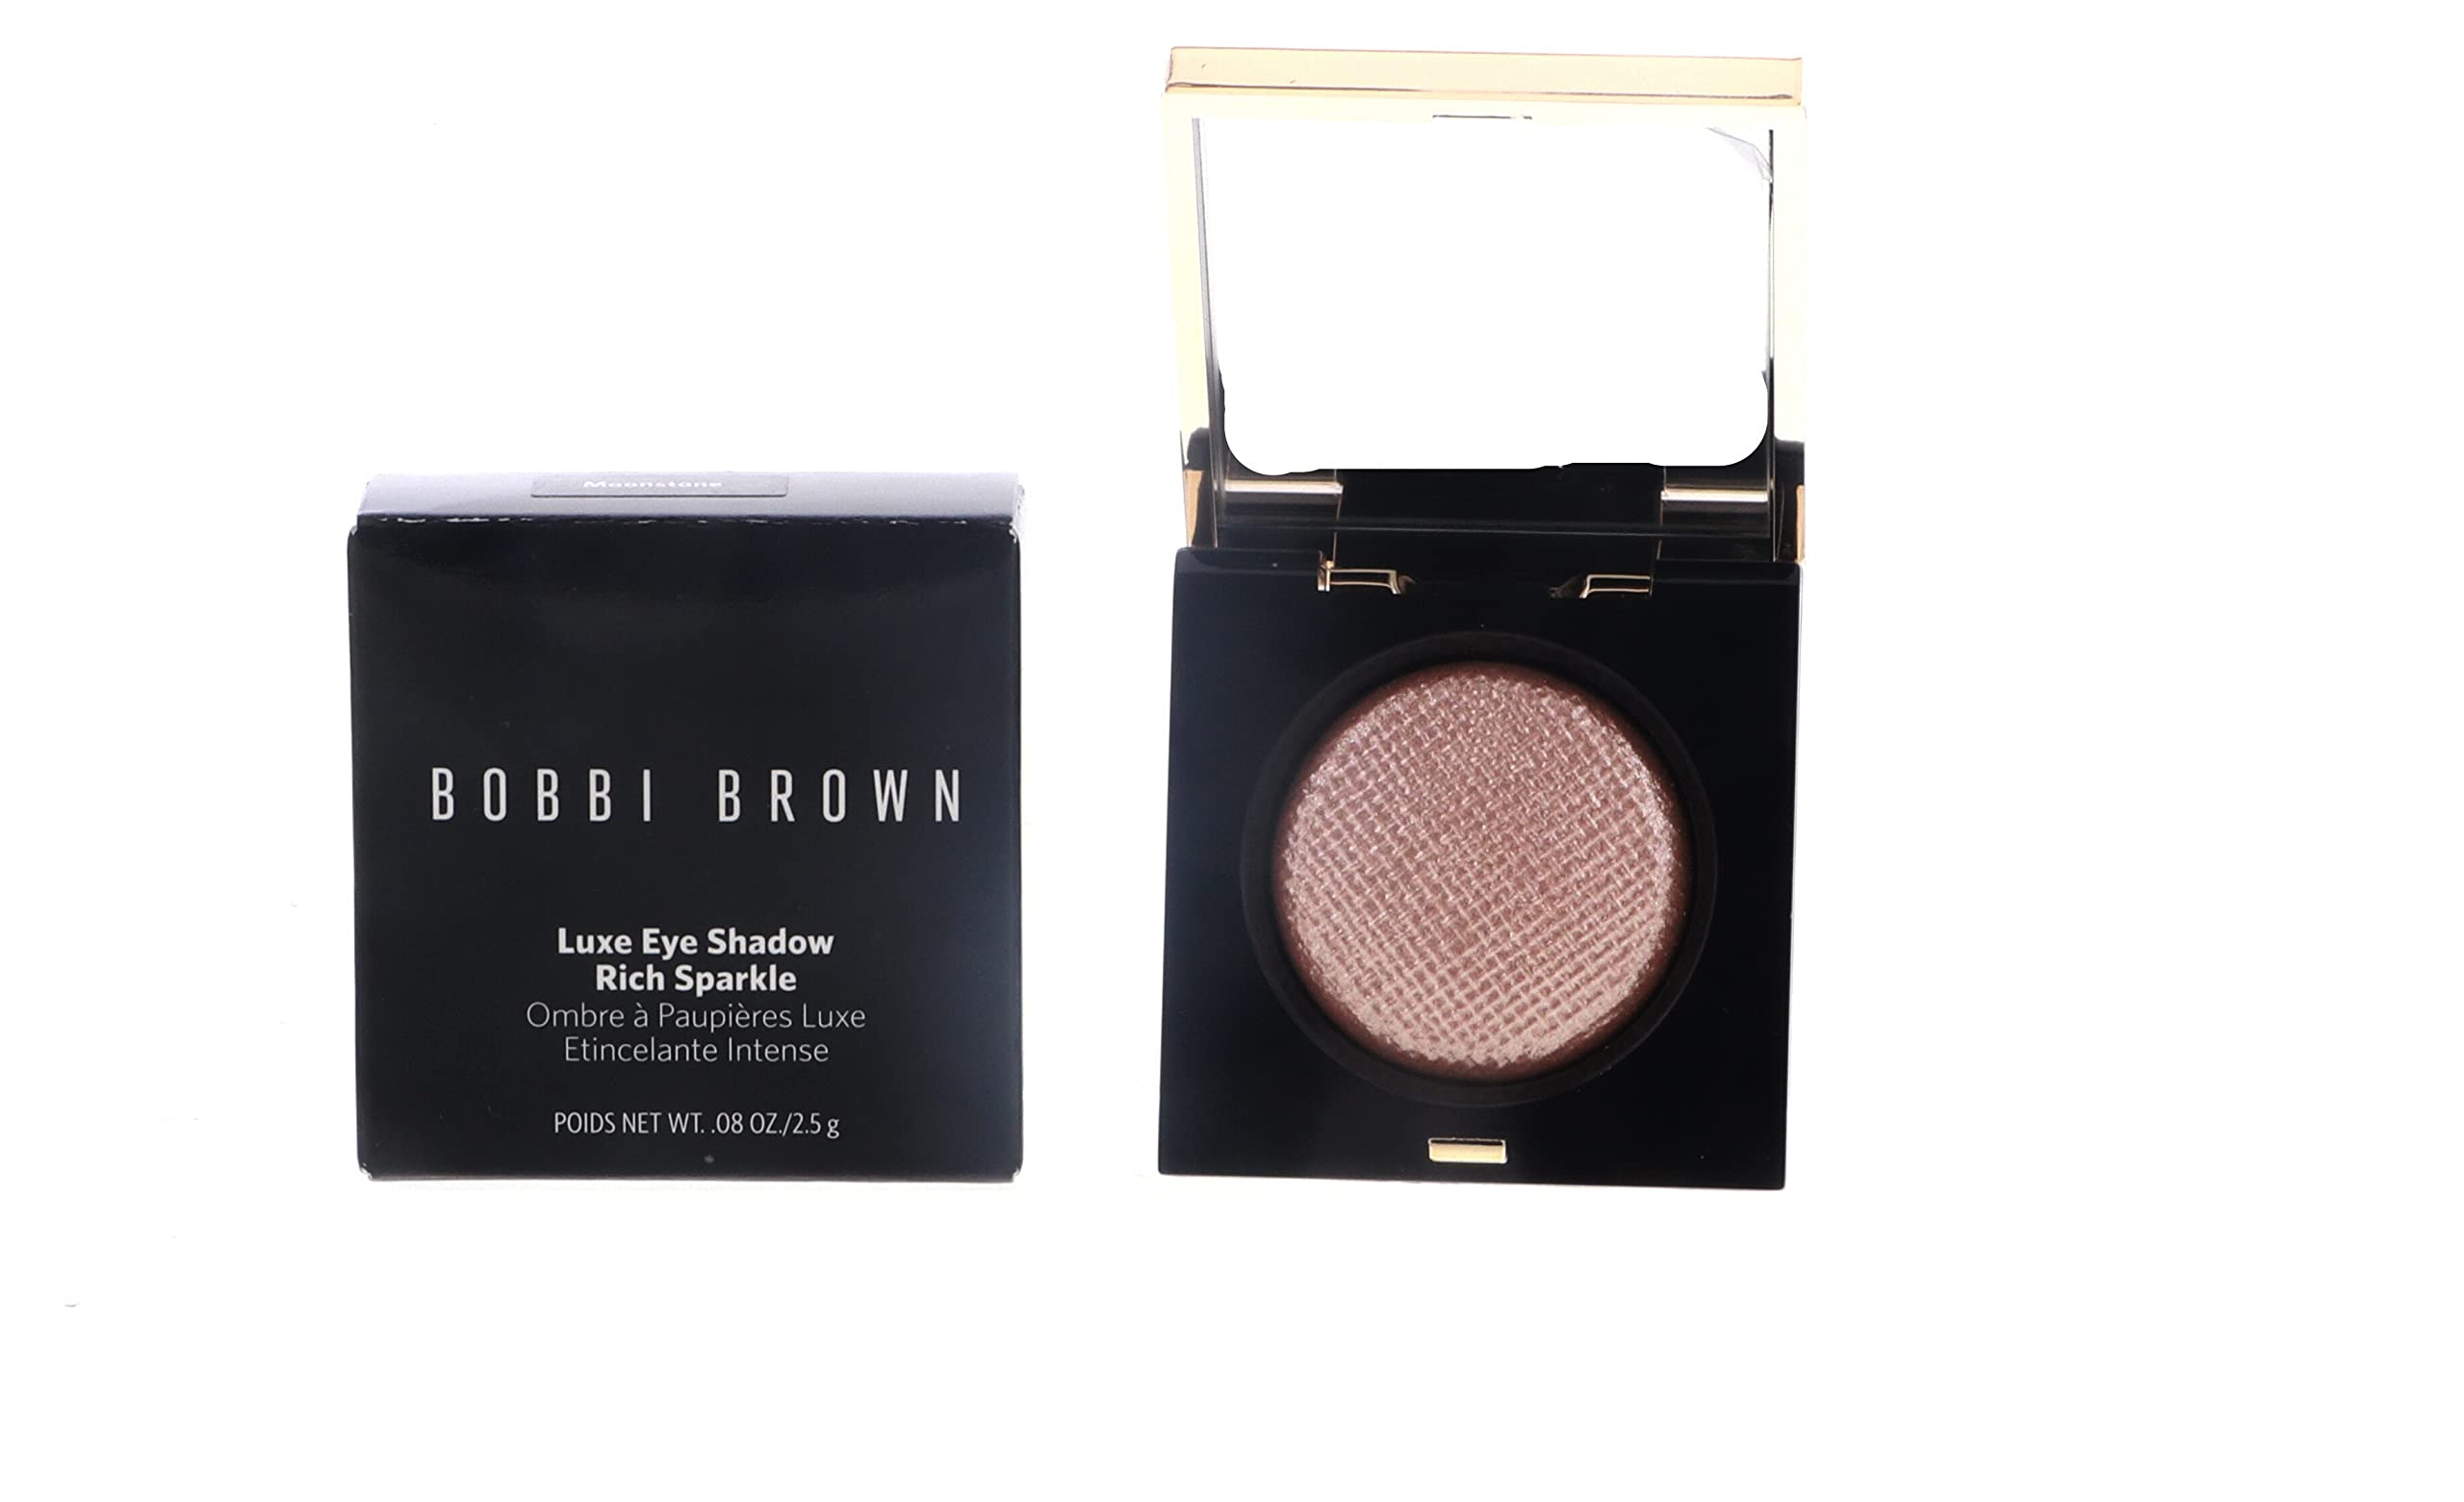 Bobbi Brown luxe eye shadow Moonstone